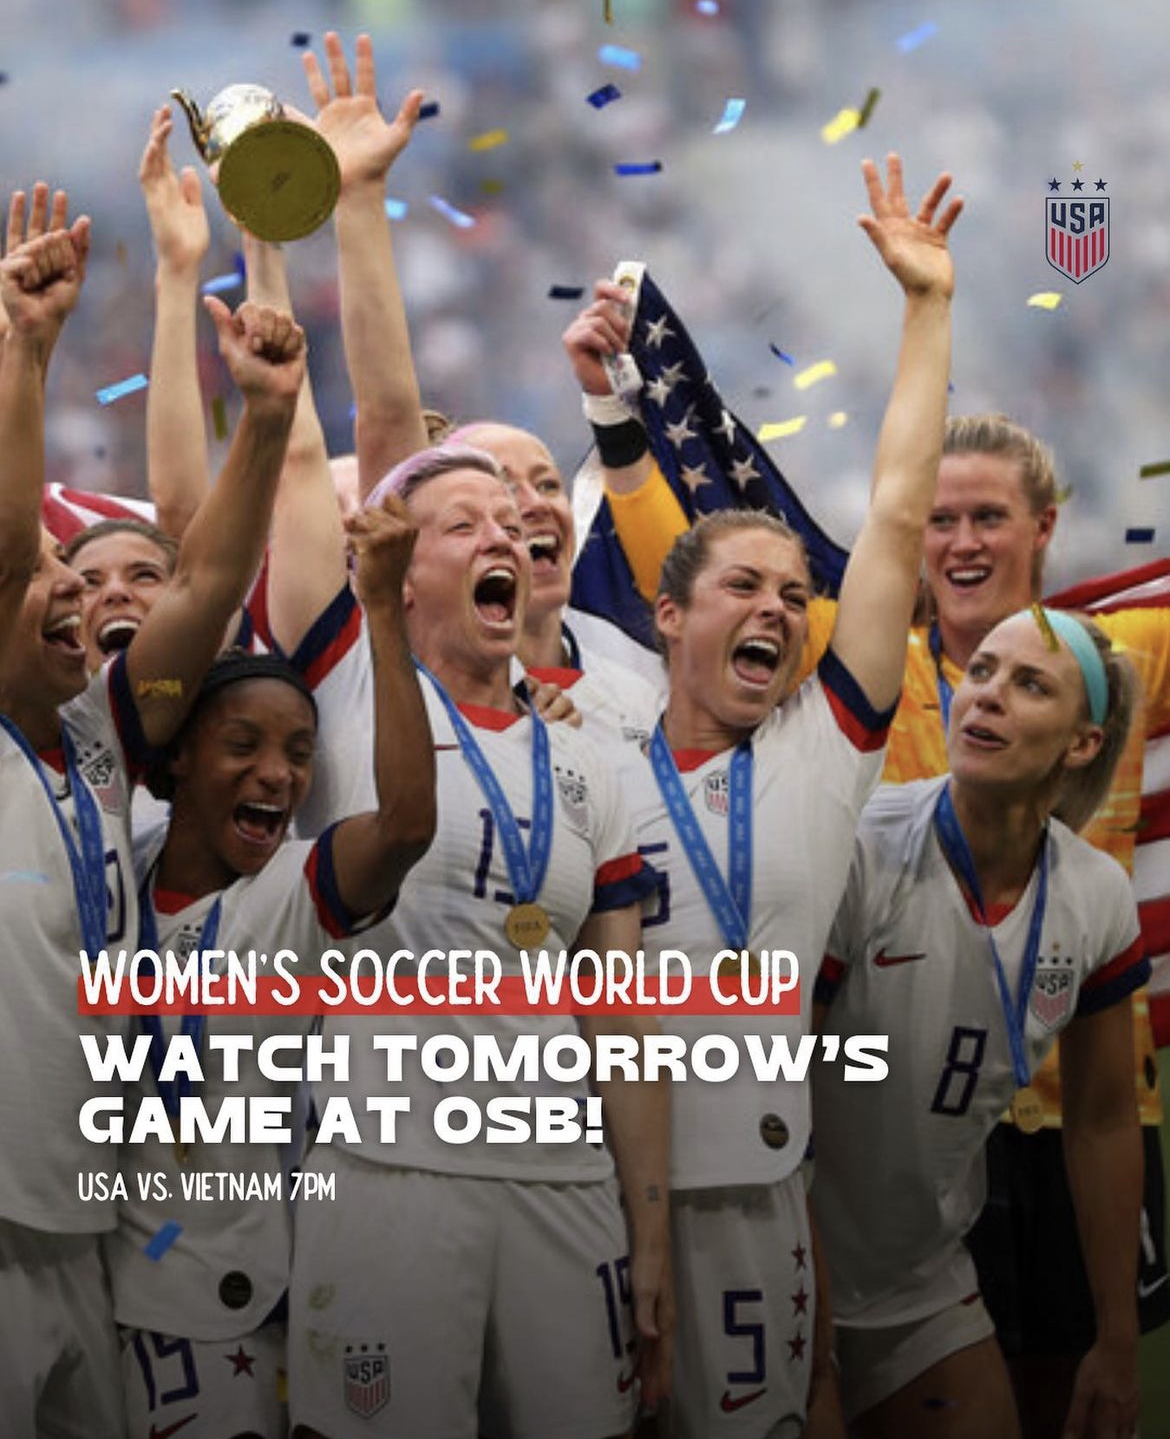 
US Women's Soccer Watch Party